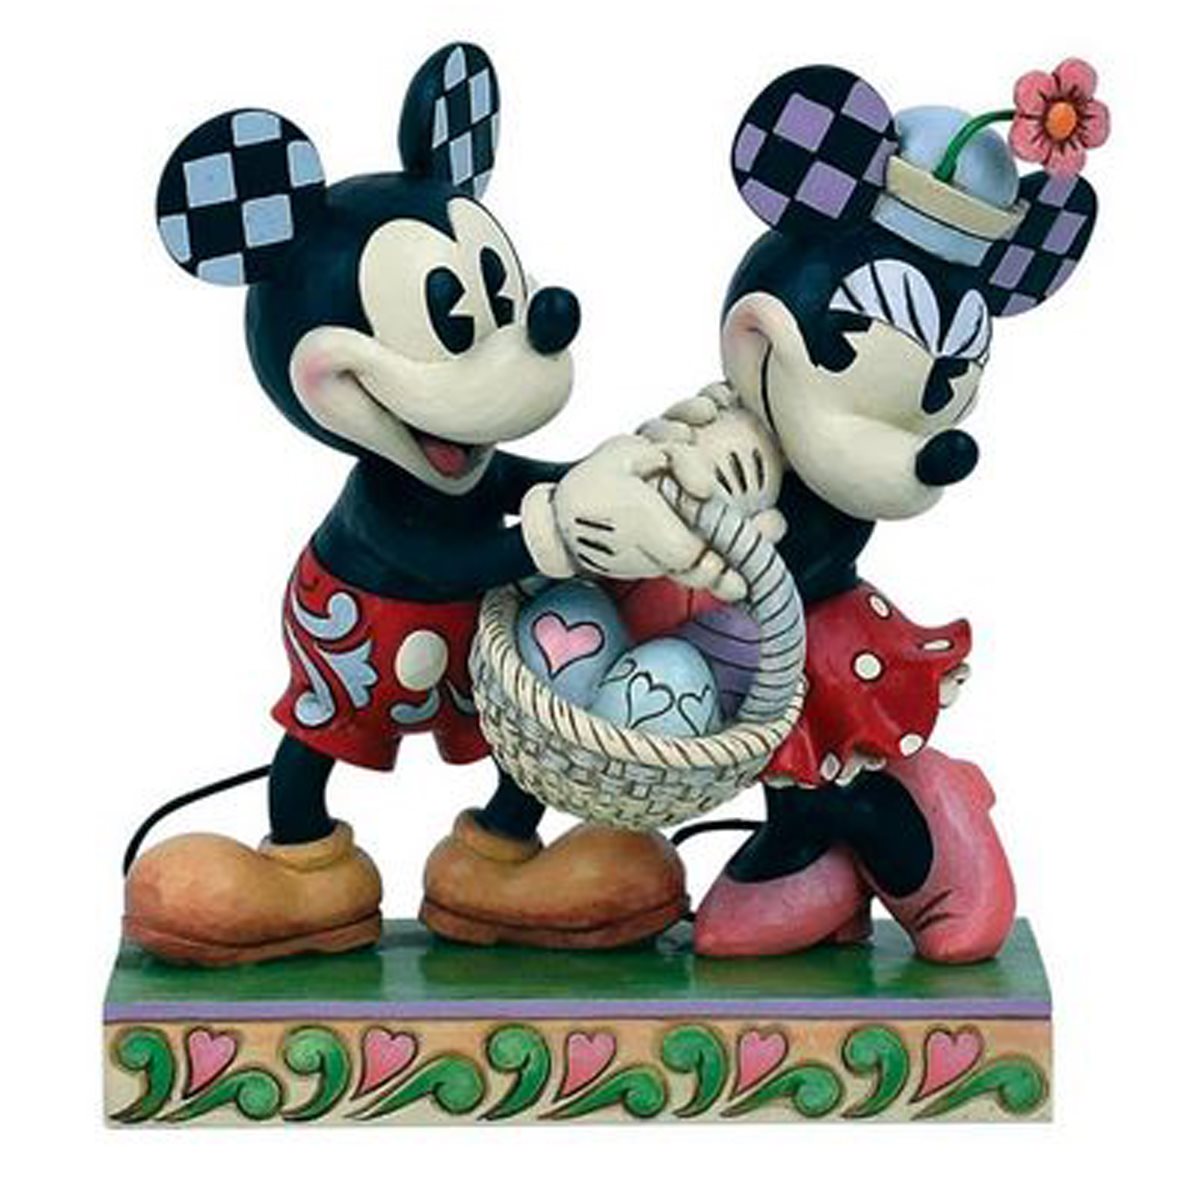 Figurine Disney Traditions Mini Mickey Mouse